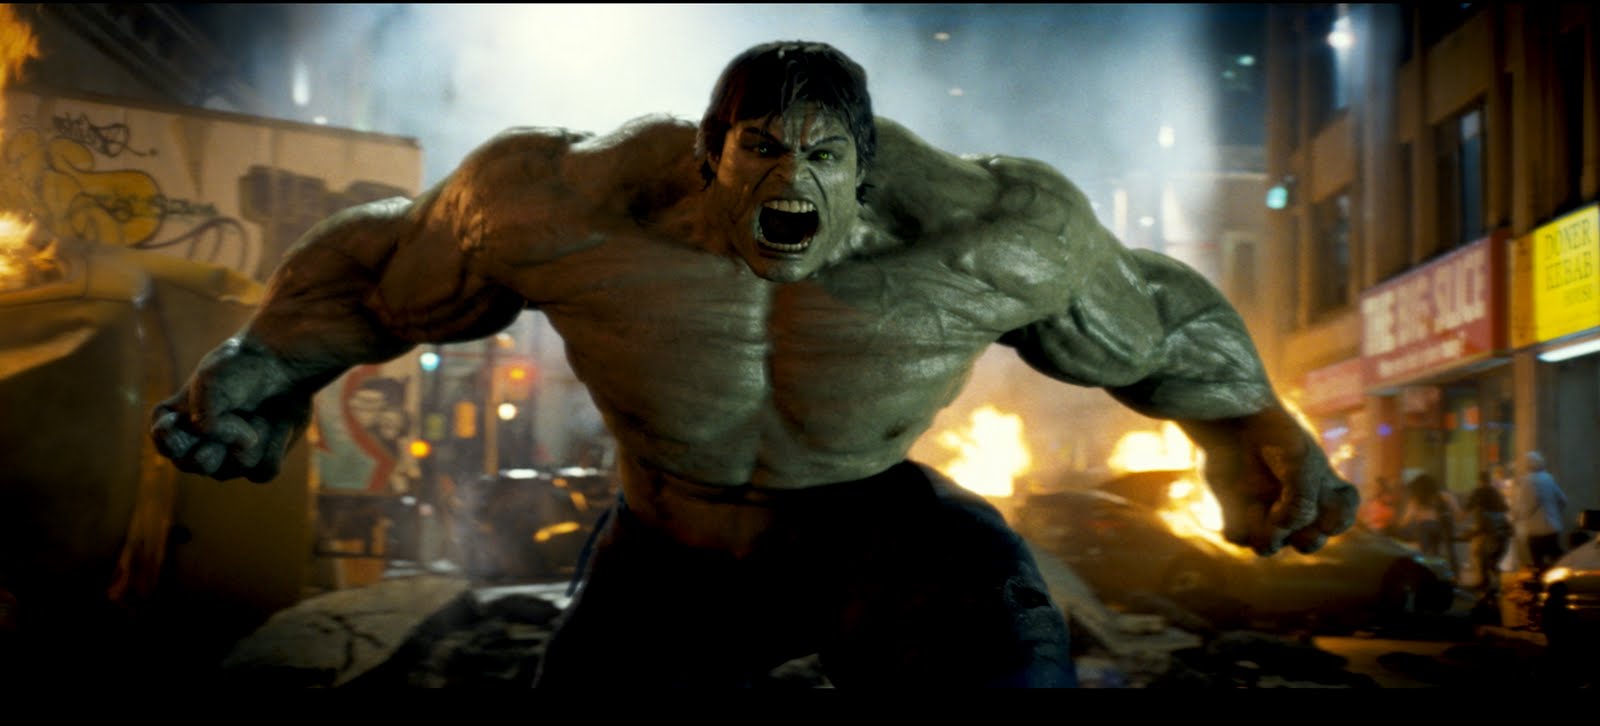 The Hulk HD Wallpaper In For Your Desktop